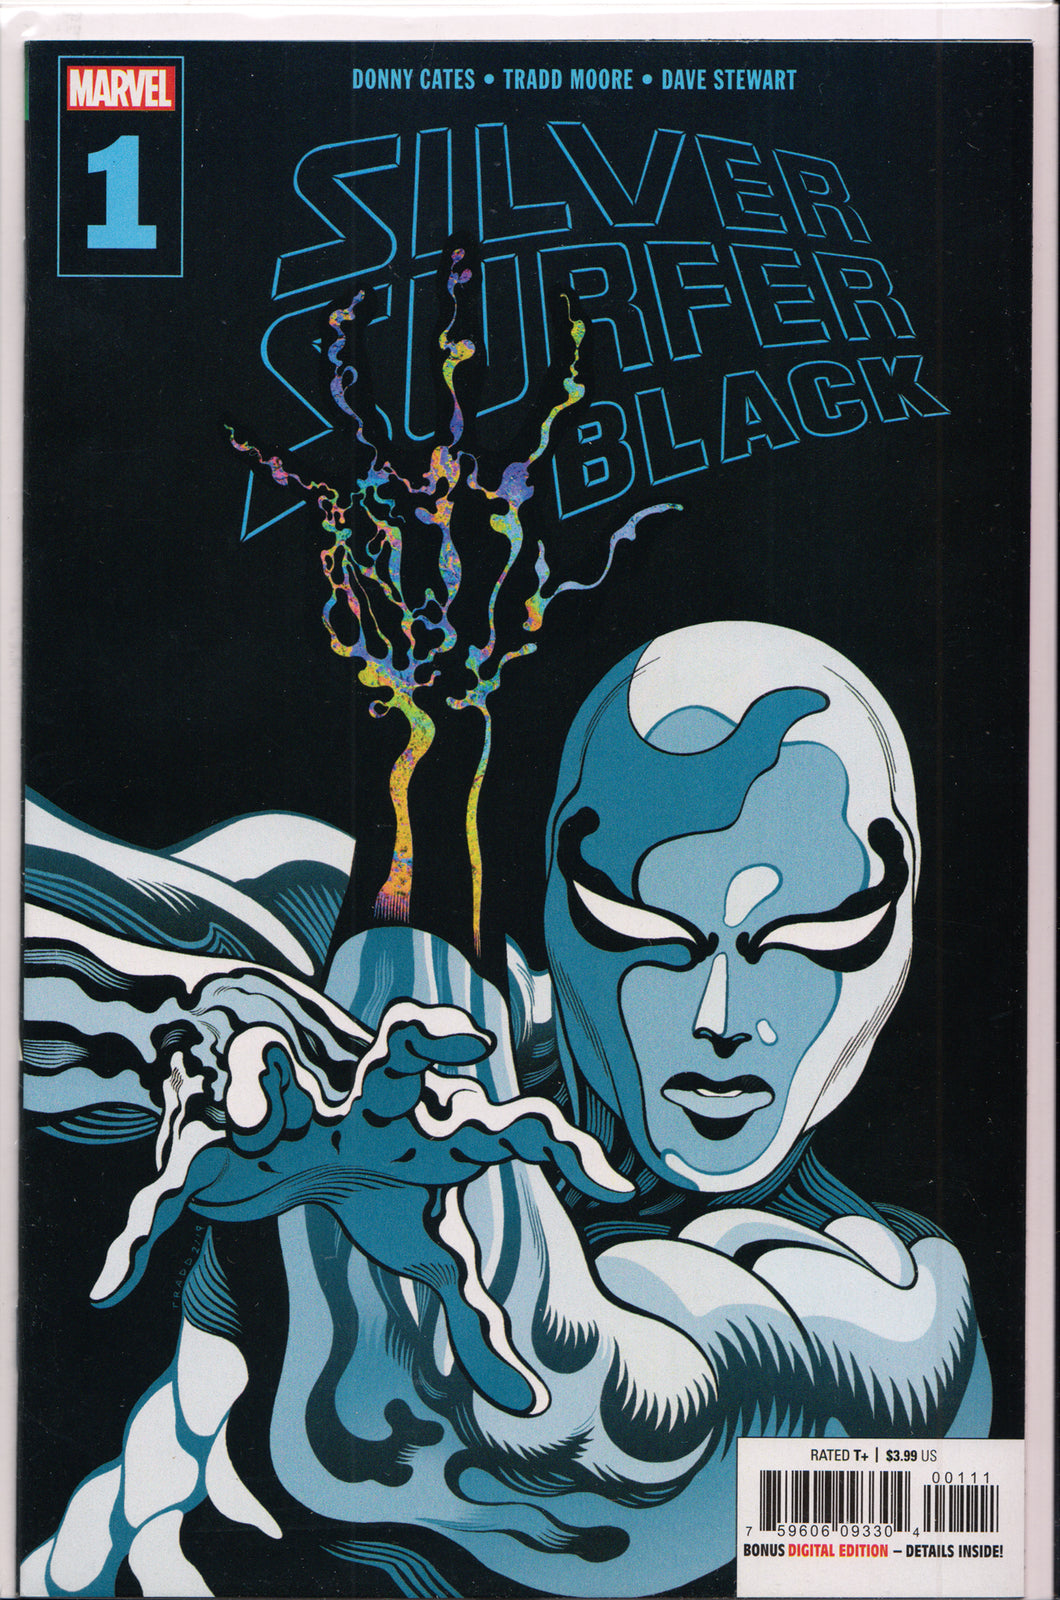 SILVER SURFER BLACK #1 (1ST PRINT) COMIC BOOK ~ Marvel Comics